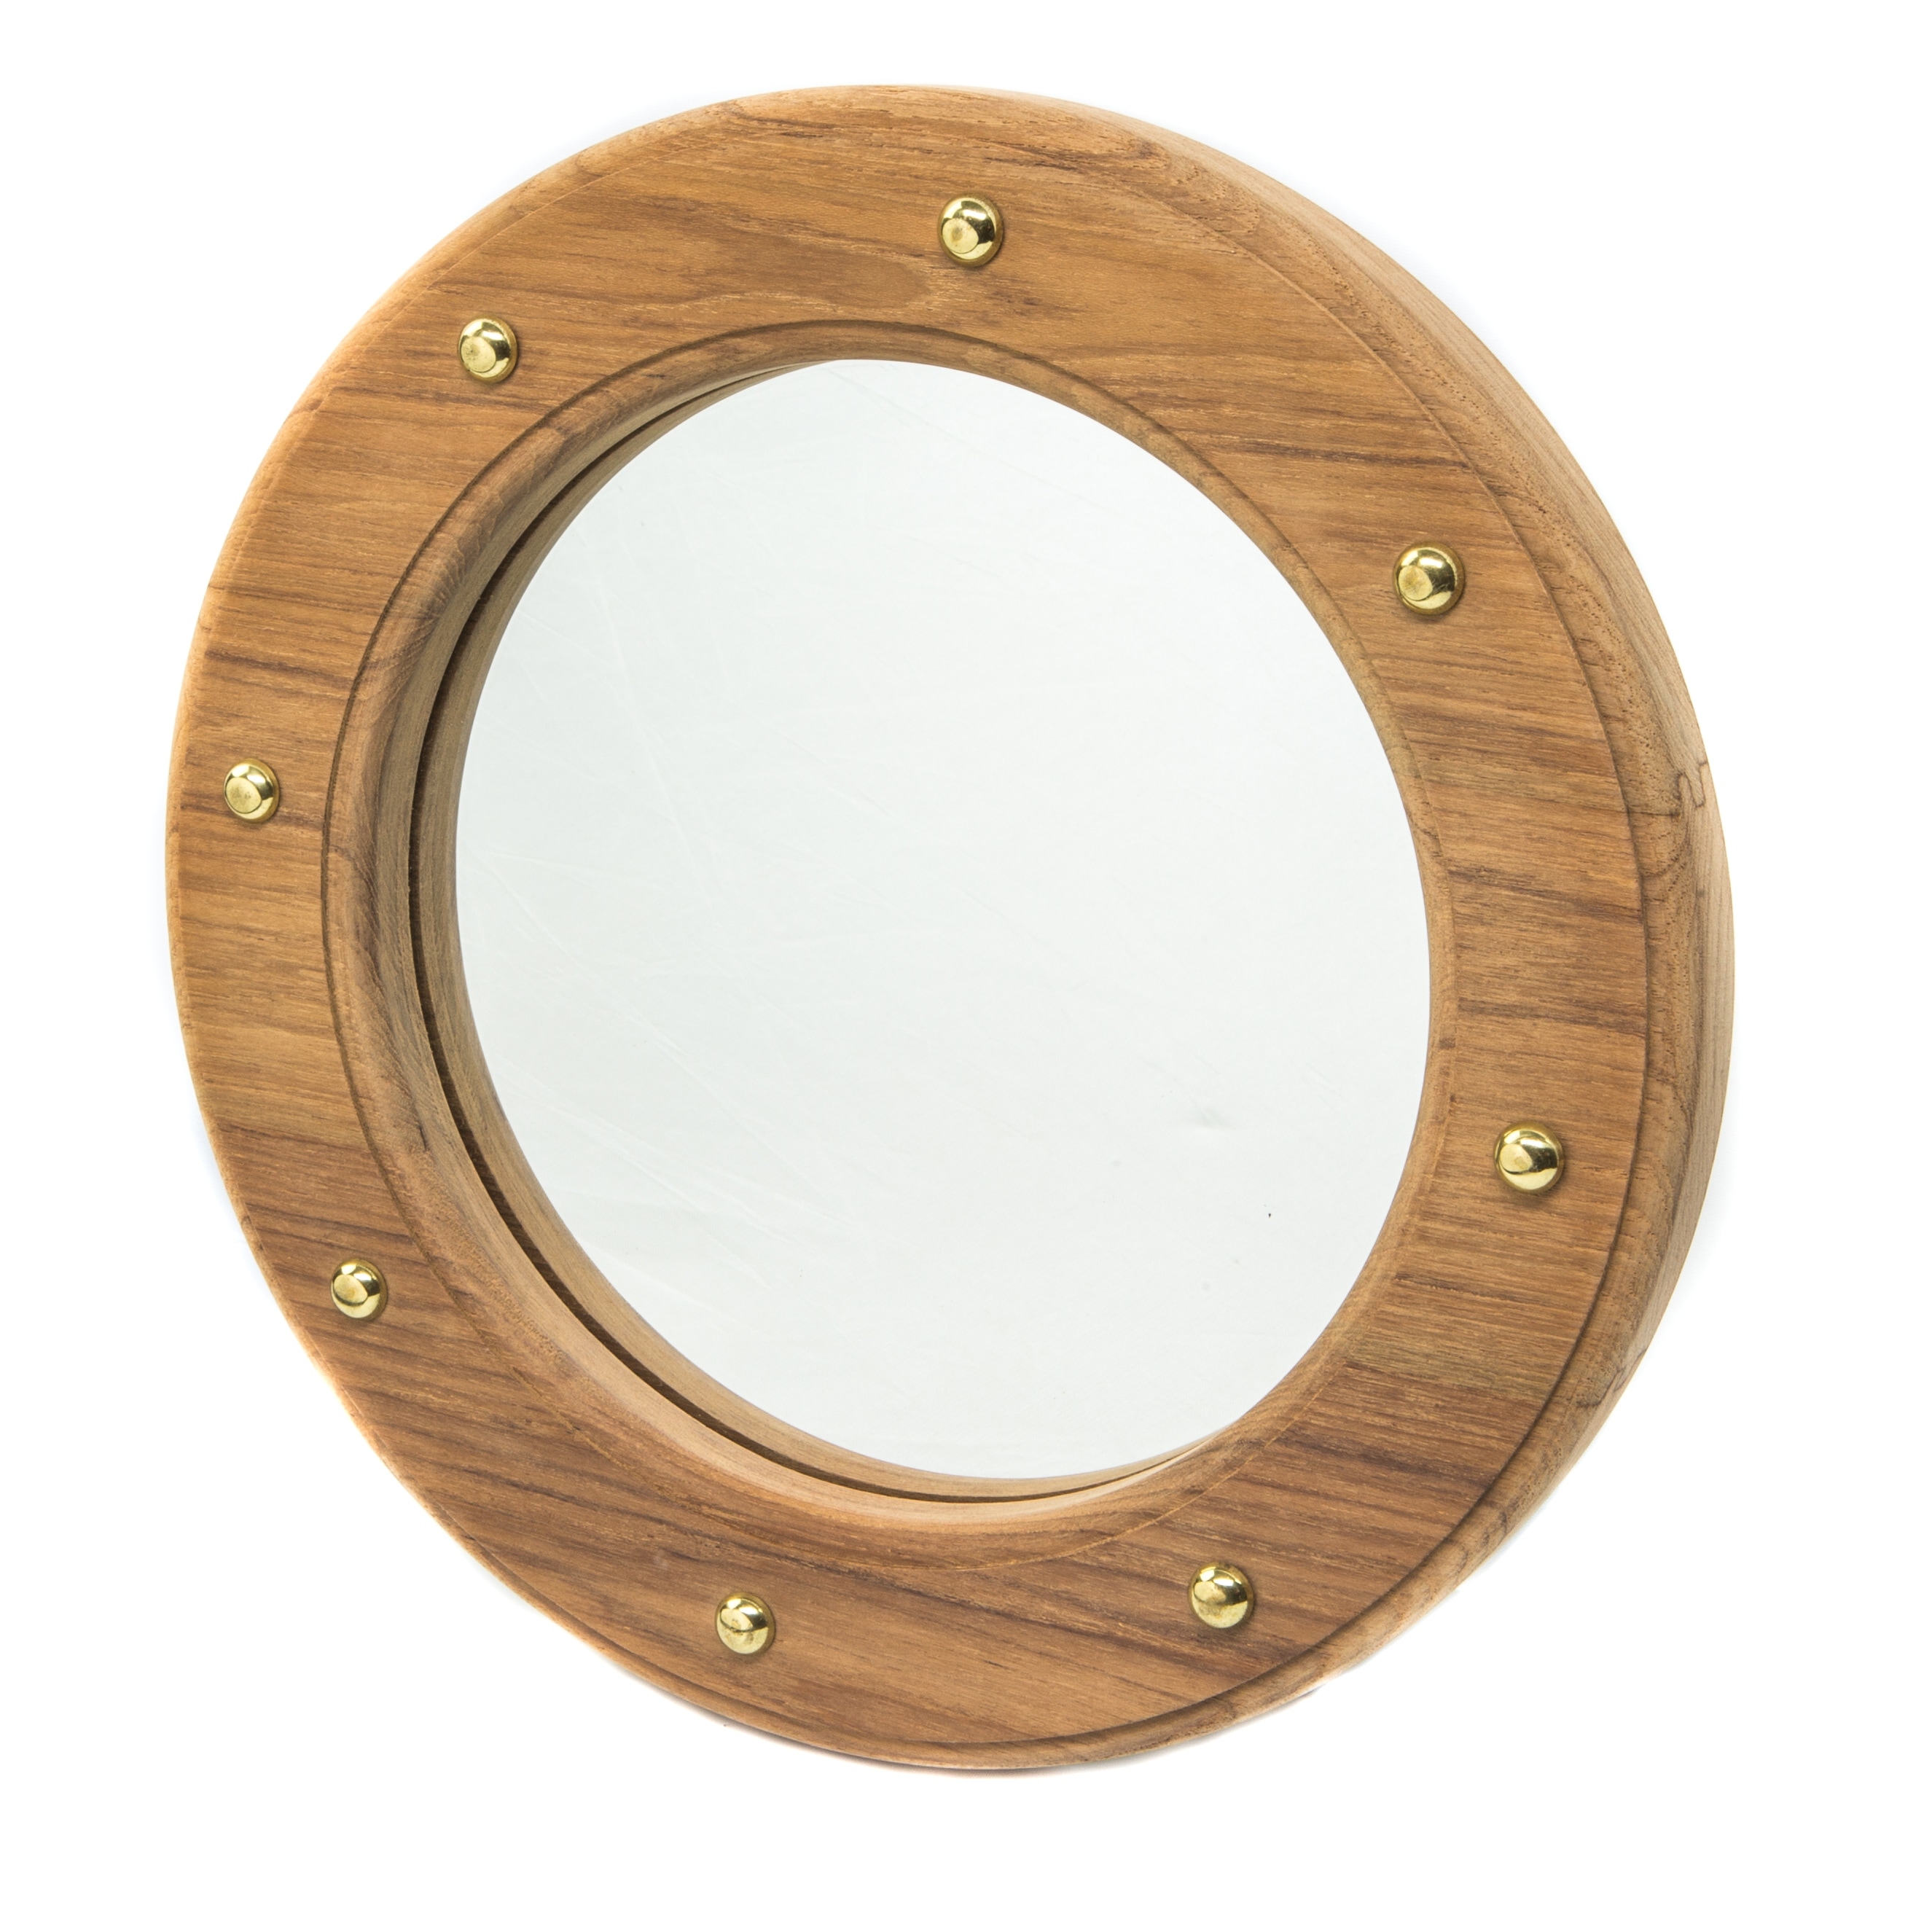 Convex Fisheye Porthole Mirror Round Gold Distressed Wood Wooden Retro 24cm 